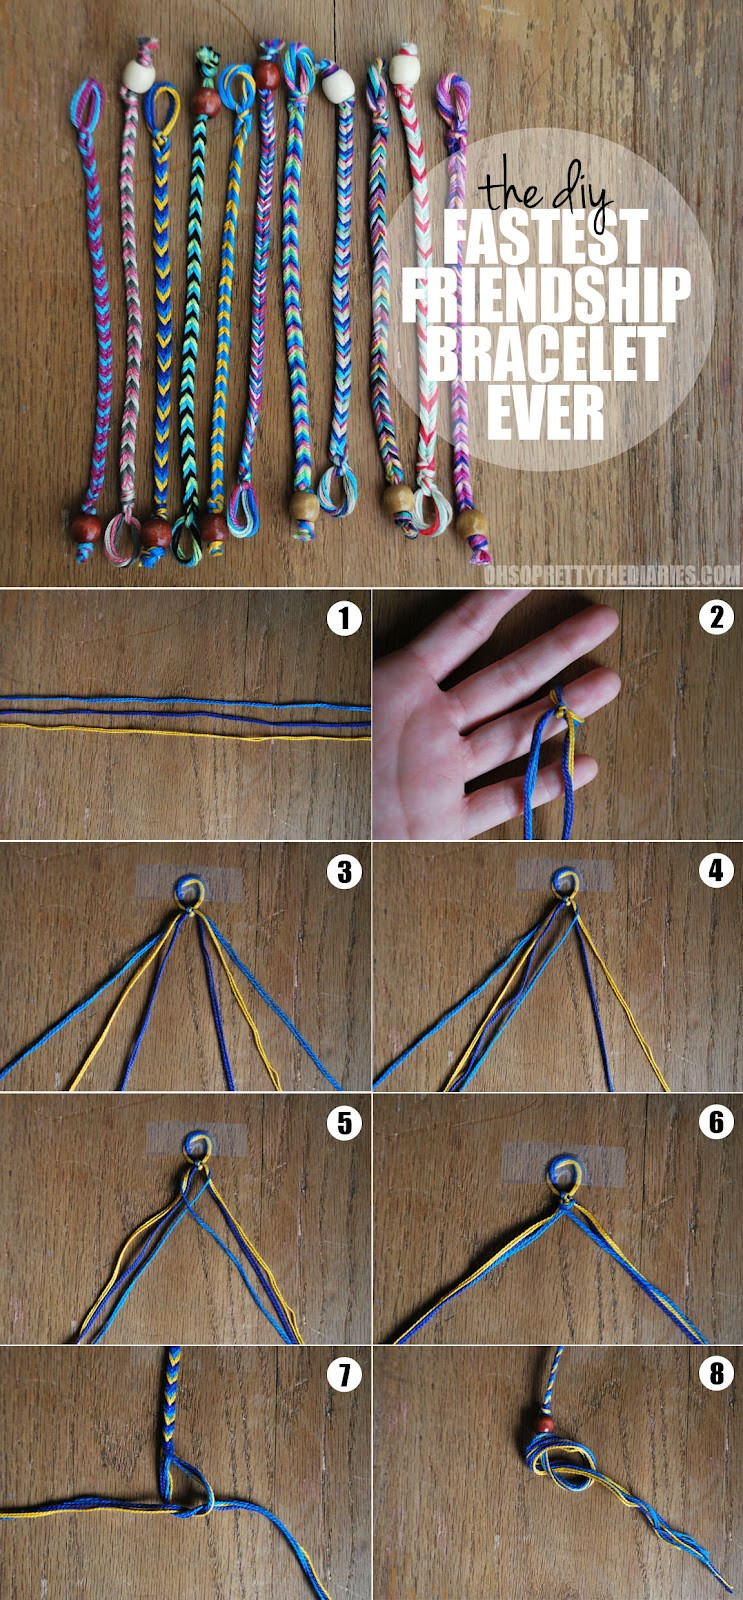 Best ideas about DIY Friendship Bracelets Patterns
. Save or Pin the DIY FASTEST FRIENDSHIP BRACELET EVER Now.